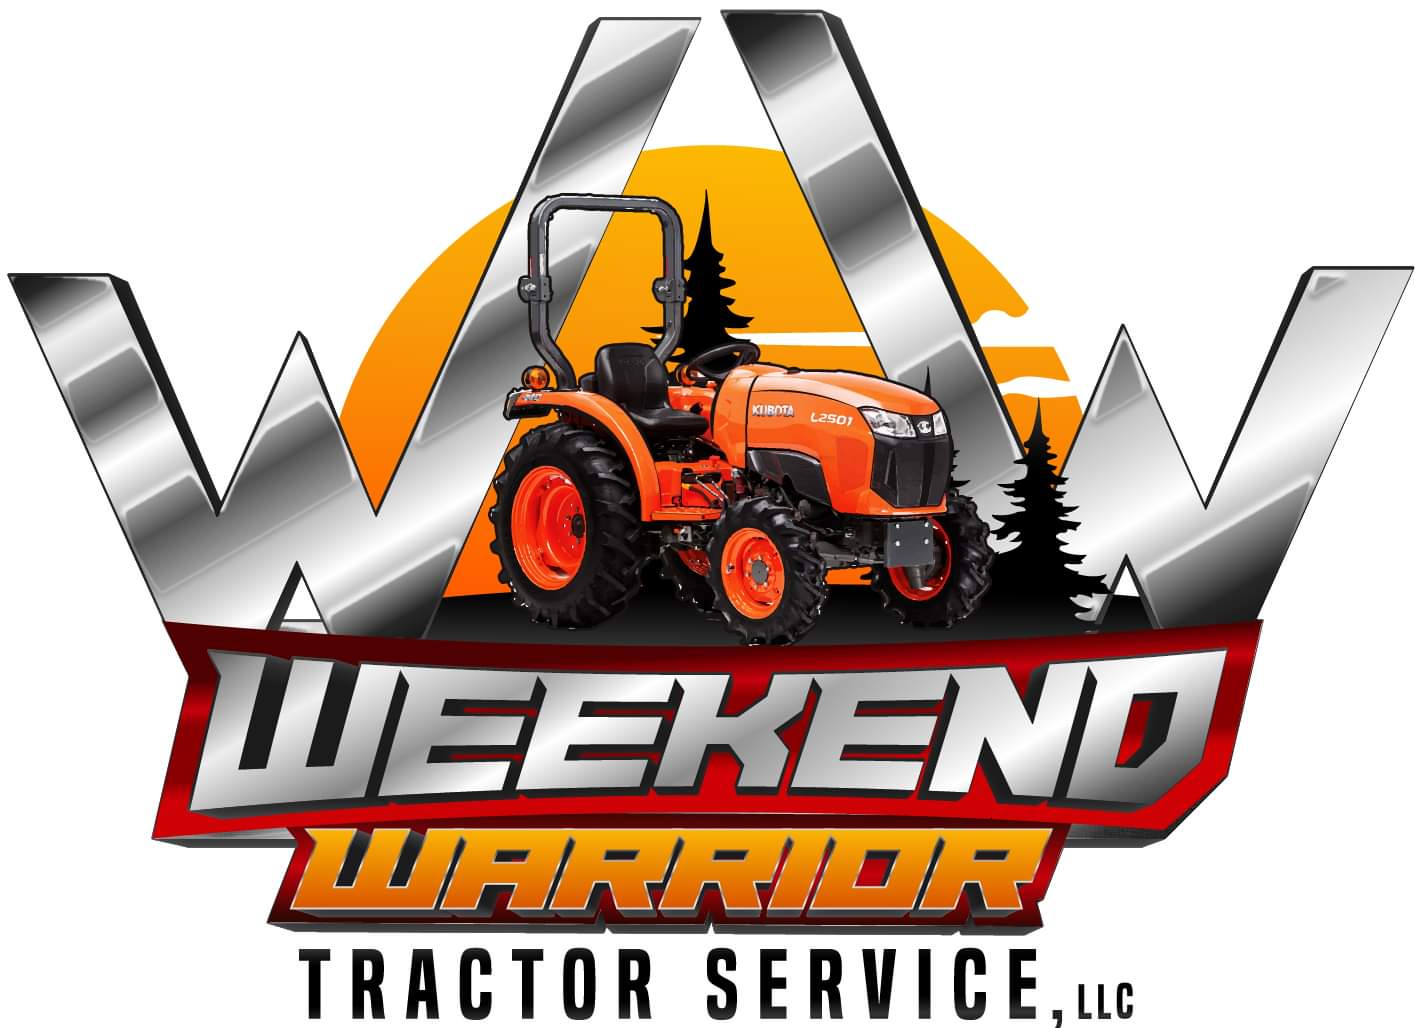 Weekend Warrior Tractor Service LLC Logo